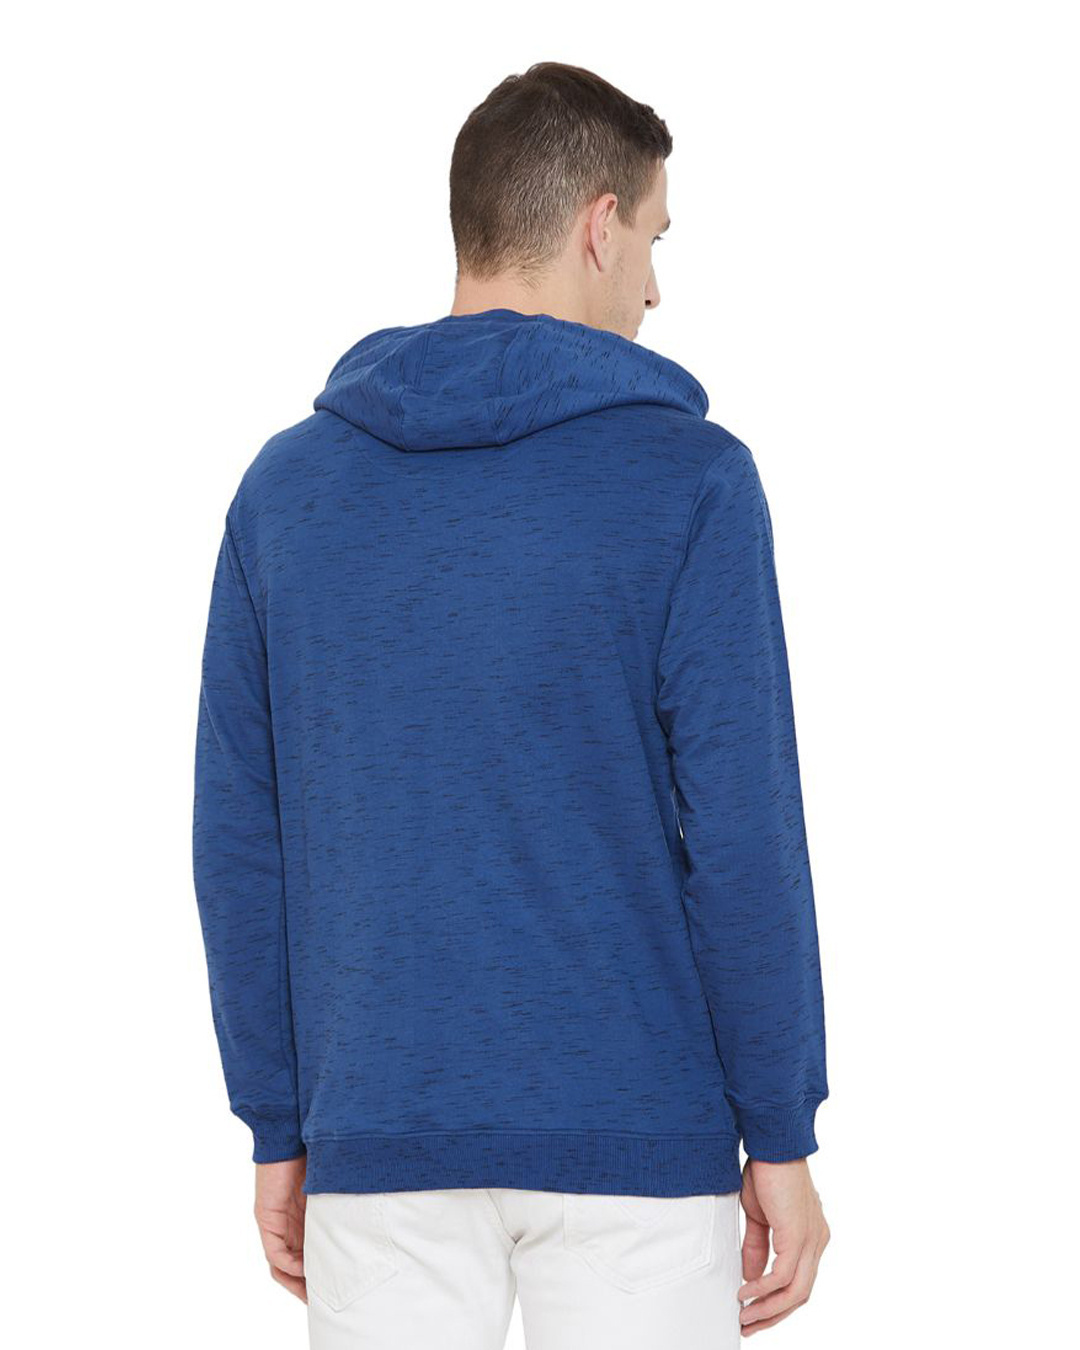 Shop Marvel Avengers Blue Hooded Men's Sweatshirt-Back